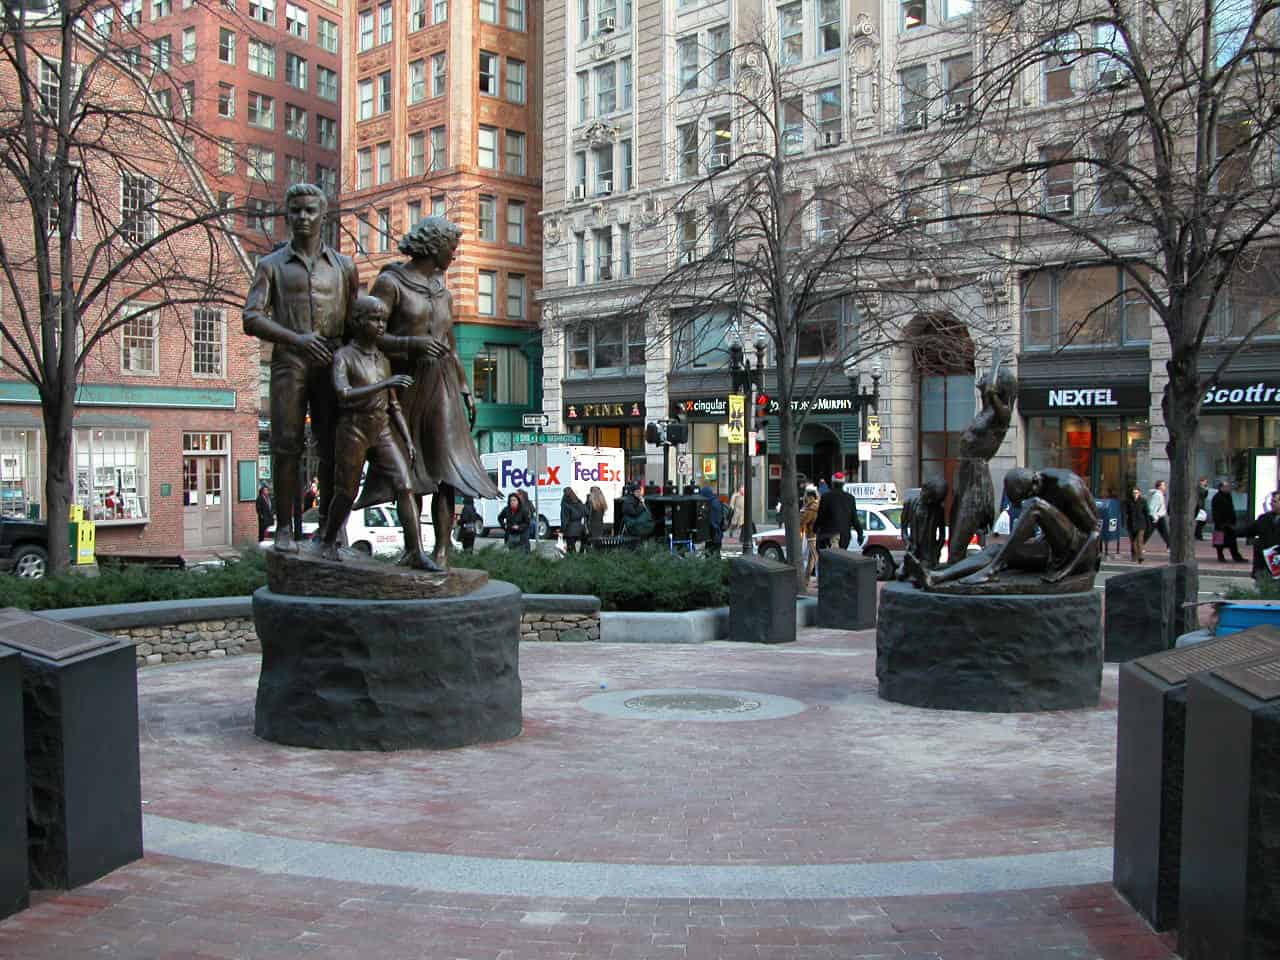 Boston Irish Famine Memorial